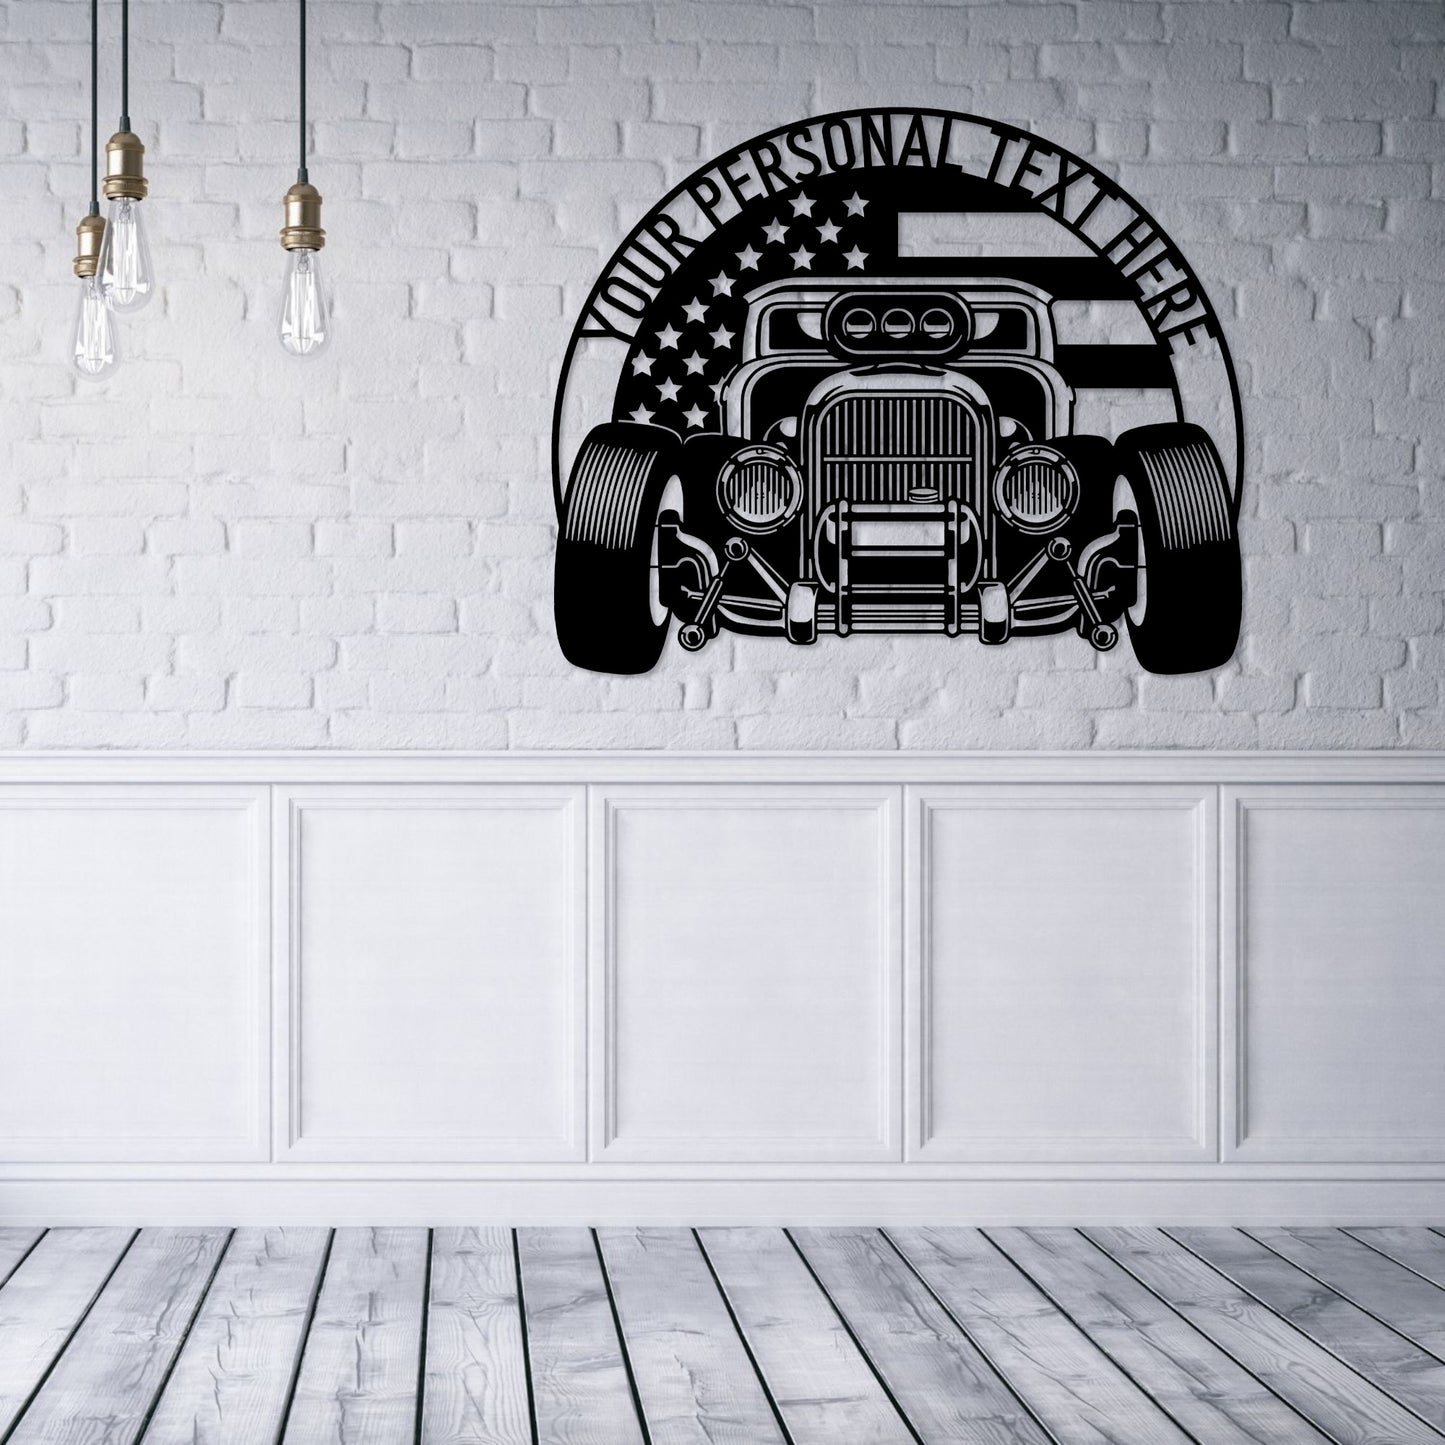 Personalized American Rat Rod Name Metal Sign. Custom Patriotic Garage Wall Decor. Mechanic Gift. Man Cave Wall Hanging. American Muscle Car